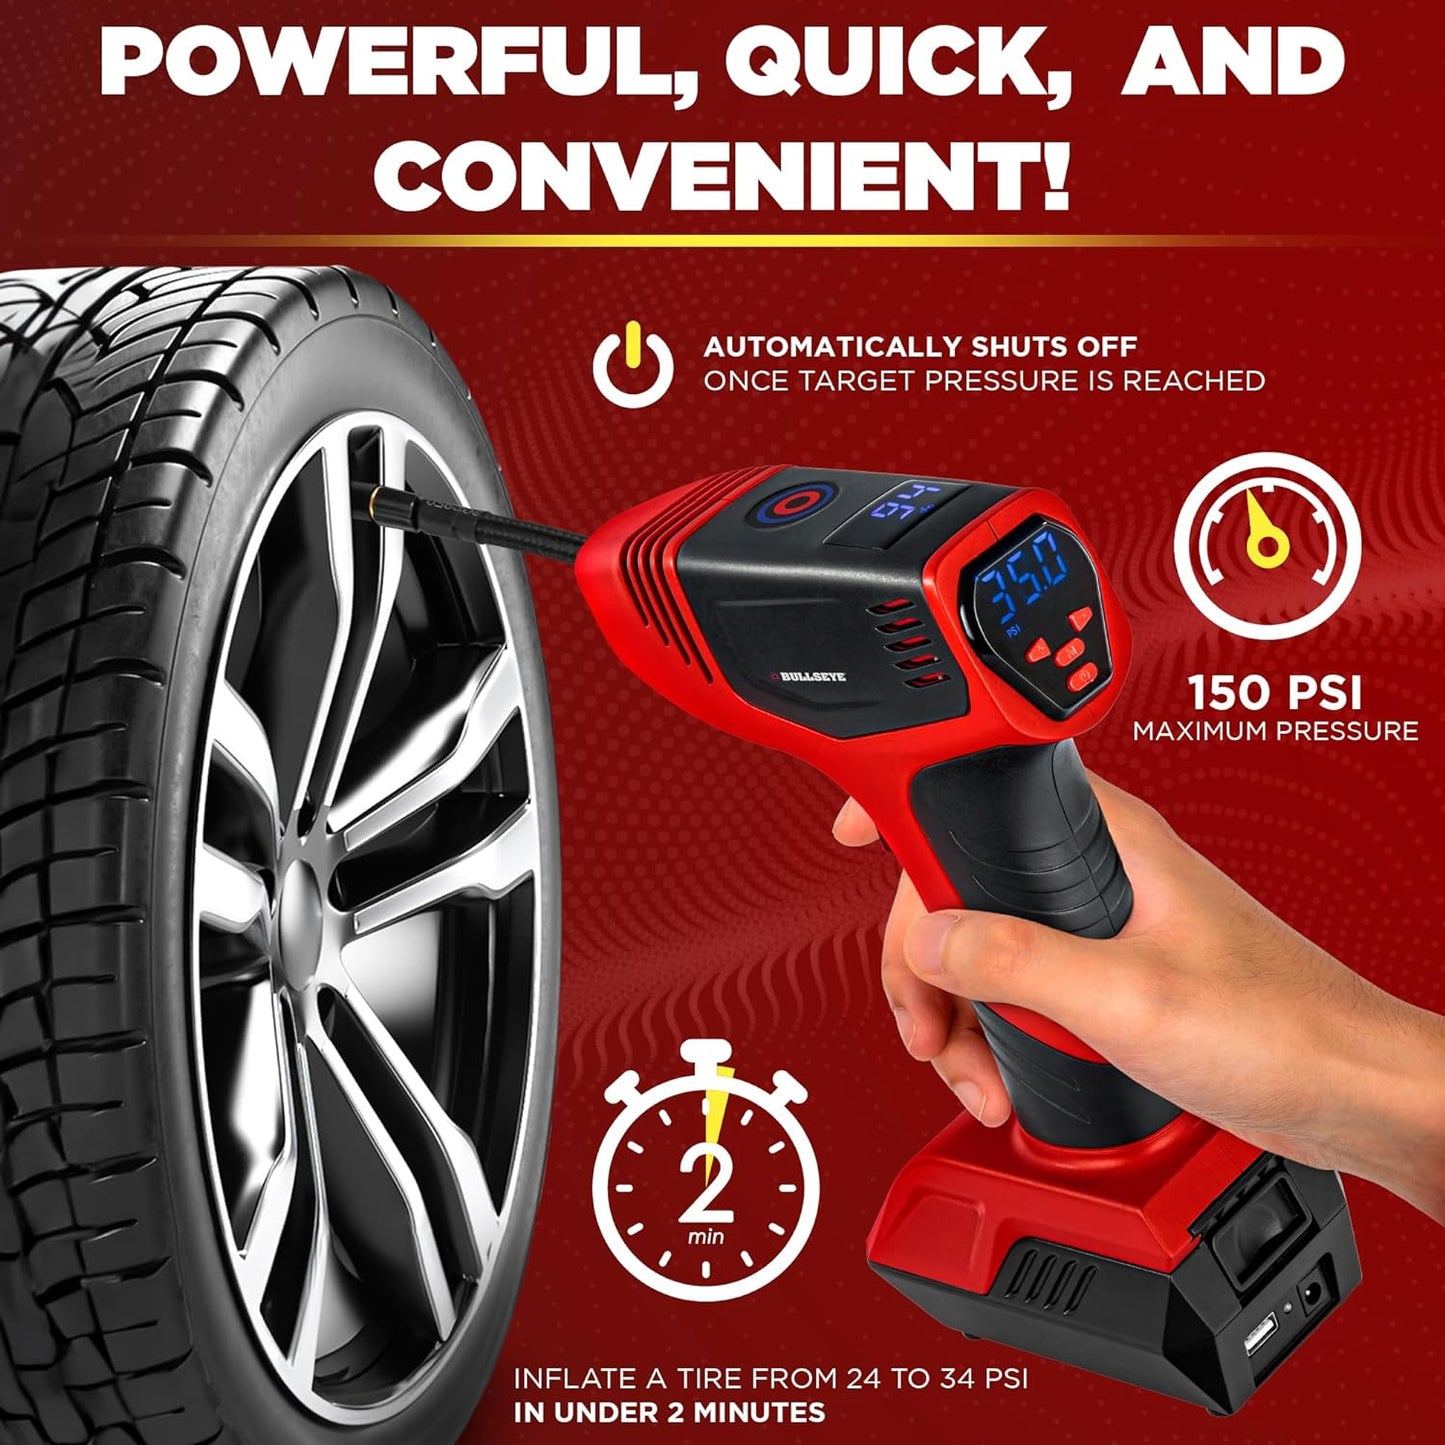 Bullseye Pro Digital Tire Inflator ASON TV Car Tire Air Pump Compressor Automatic 150 PSI w/Gauge Display Screen & Pre-set Pressure in KPA, PSI, BAR, Kg/cm, Built-in LED Lights, Rechargeable